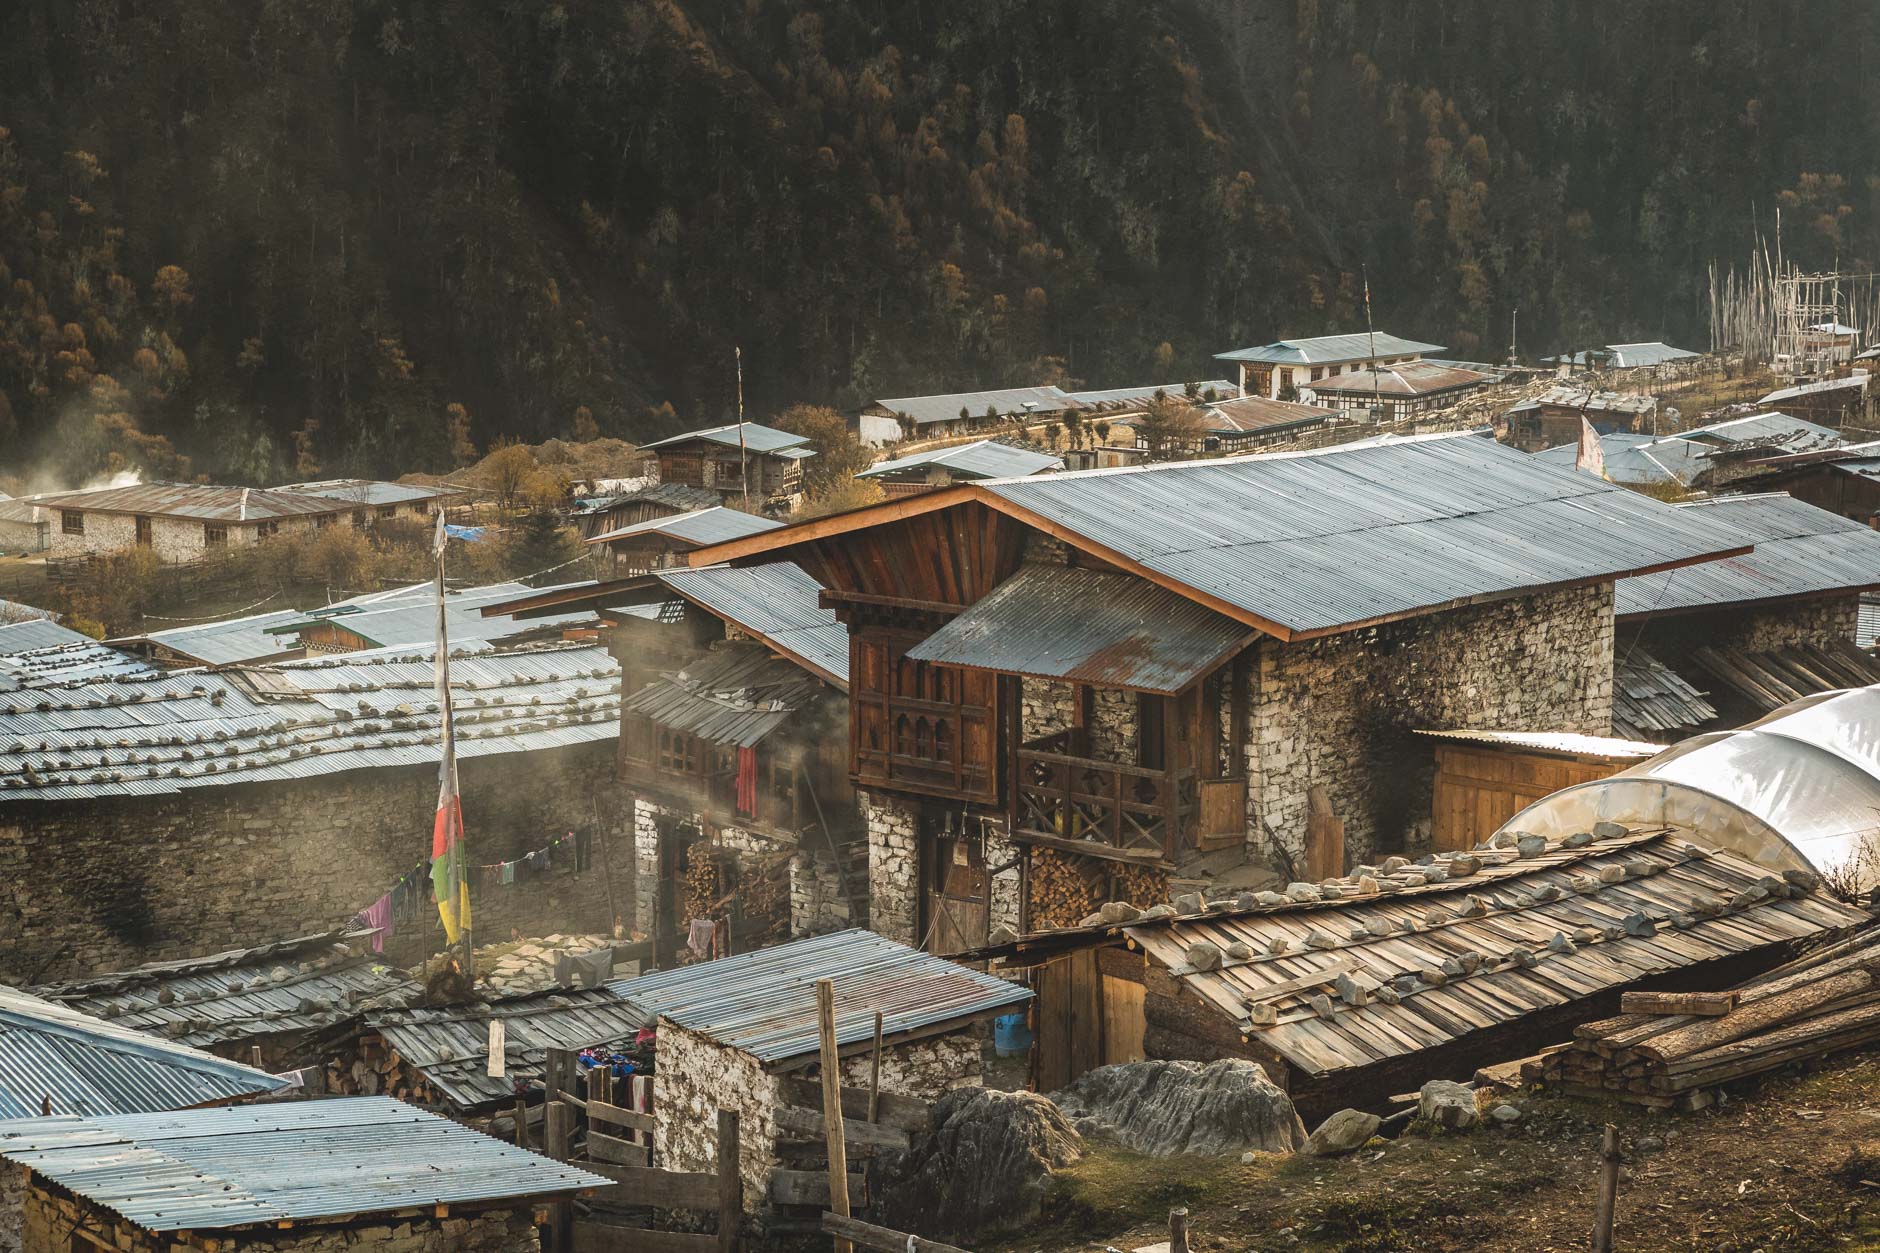 Homes in Merak, Bhutan